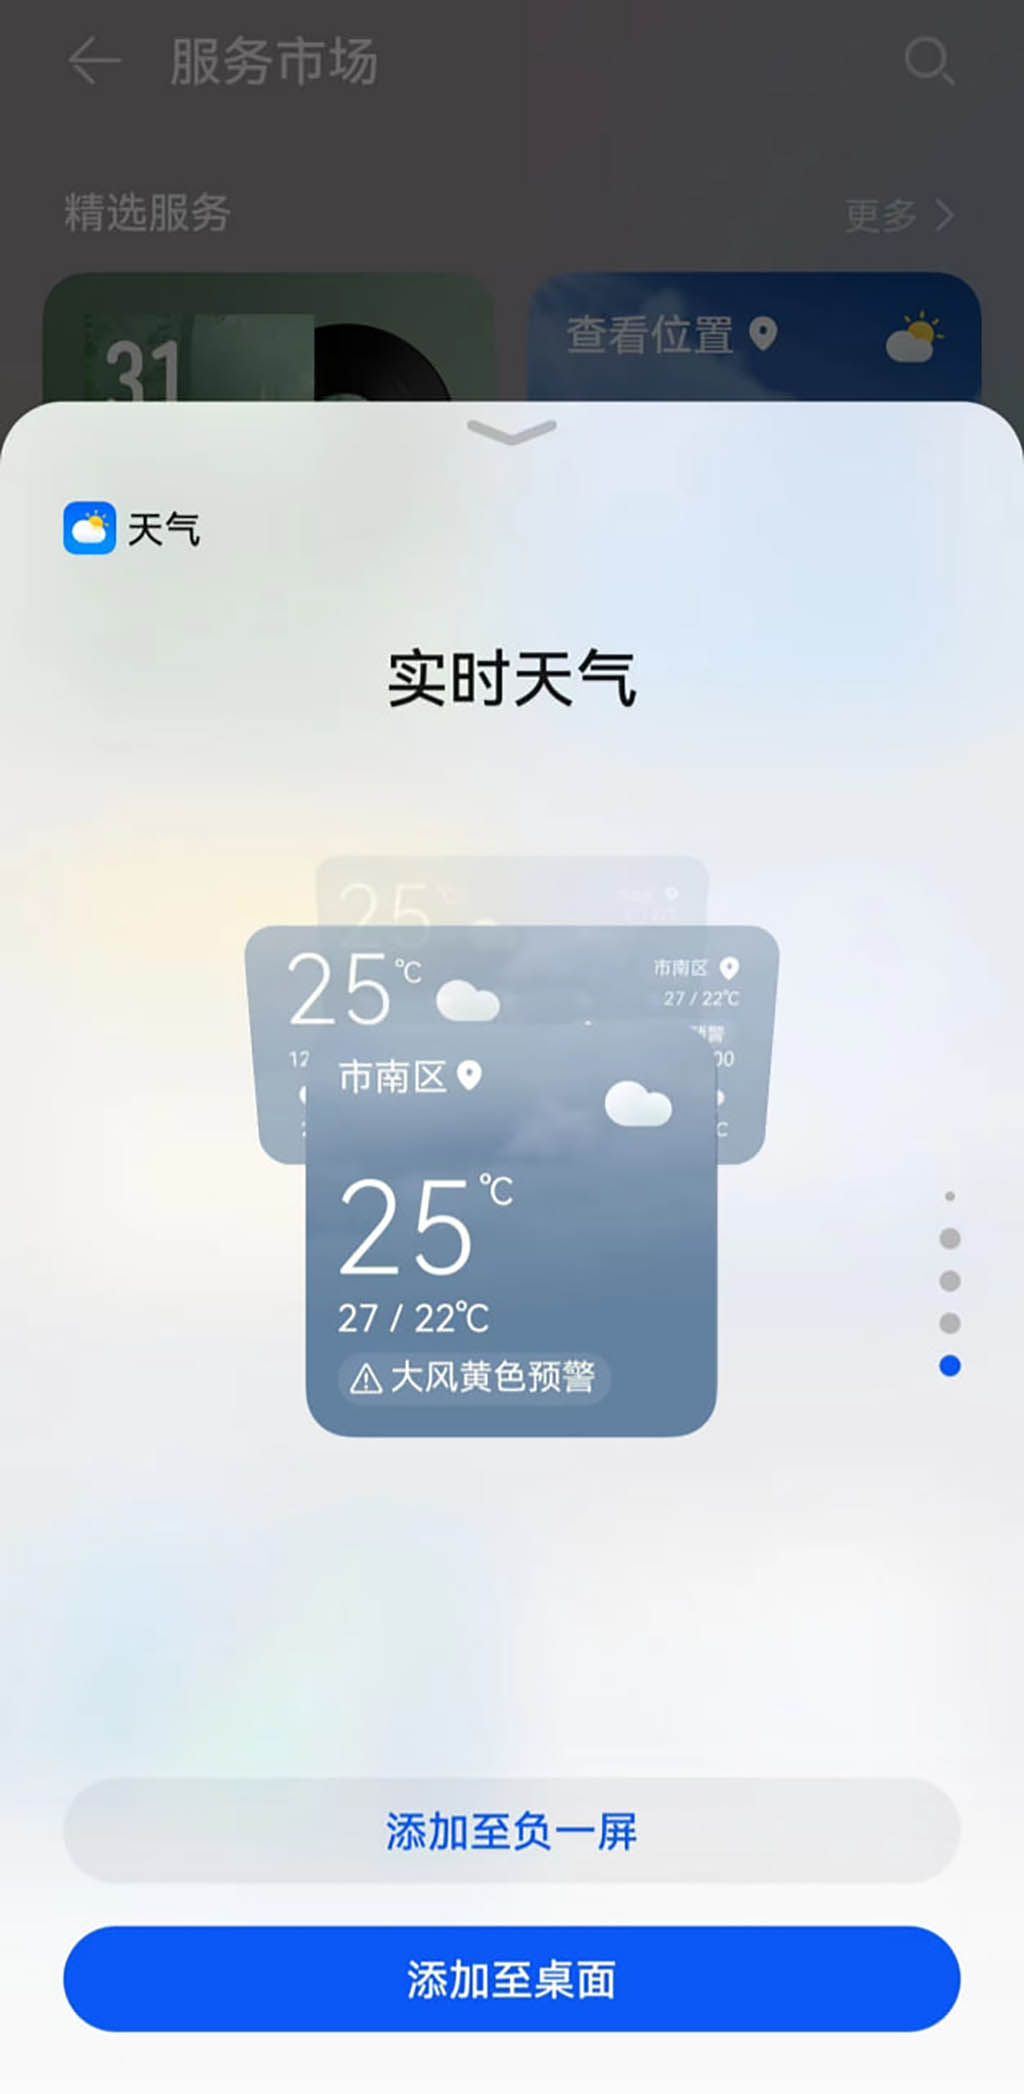 Huawei Assistant 14.1.9.200 public beta